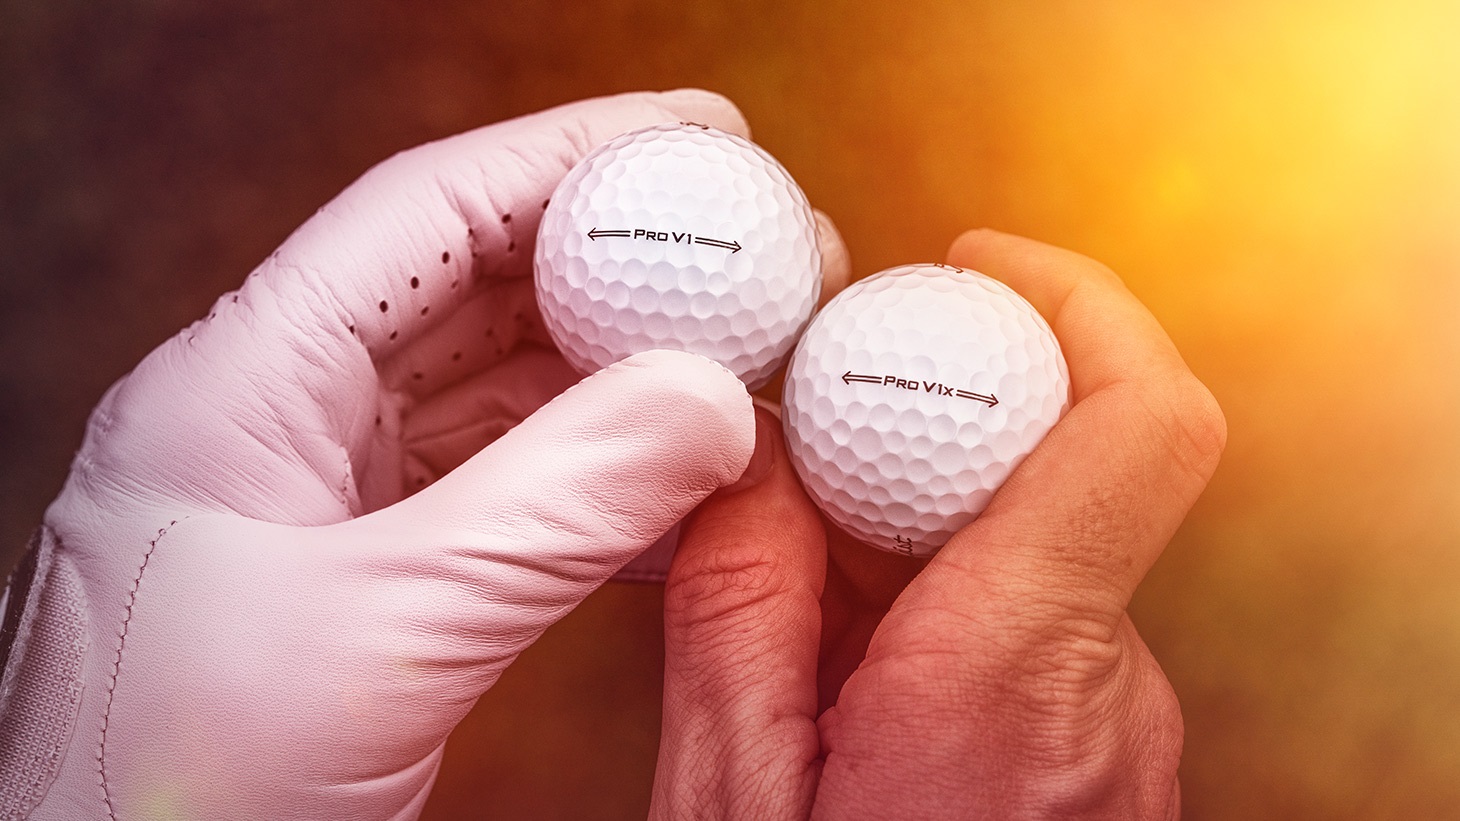 A golfer compares new Titleist Pro V1 and Pro V1x golf balls